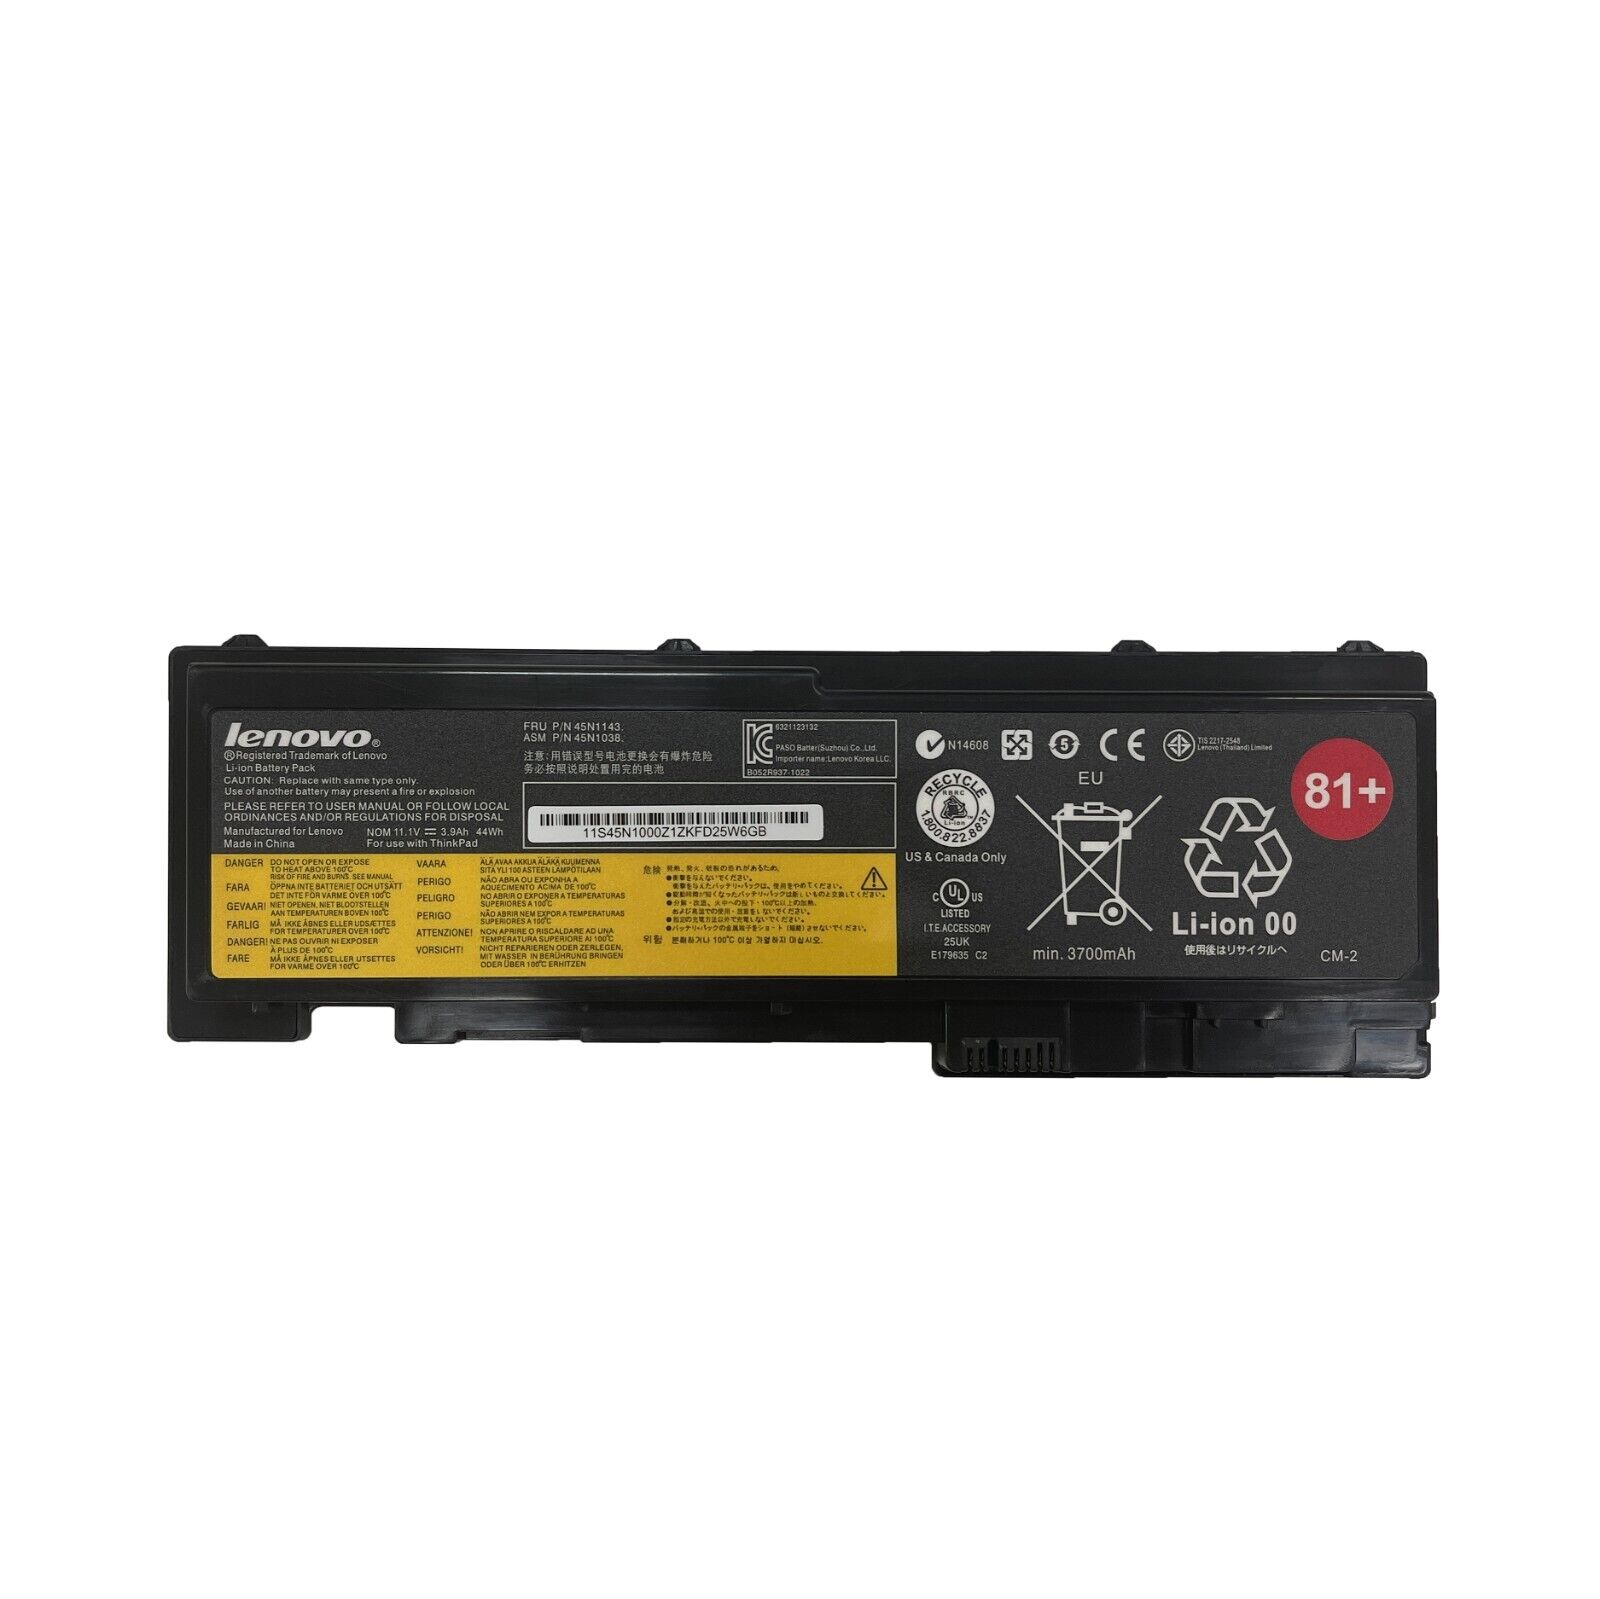 OEM 44Wh T430s Battery for Lenovo ThinkPad T430s T420s T420i 45N1036 45N1037 81+